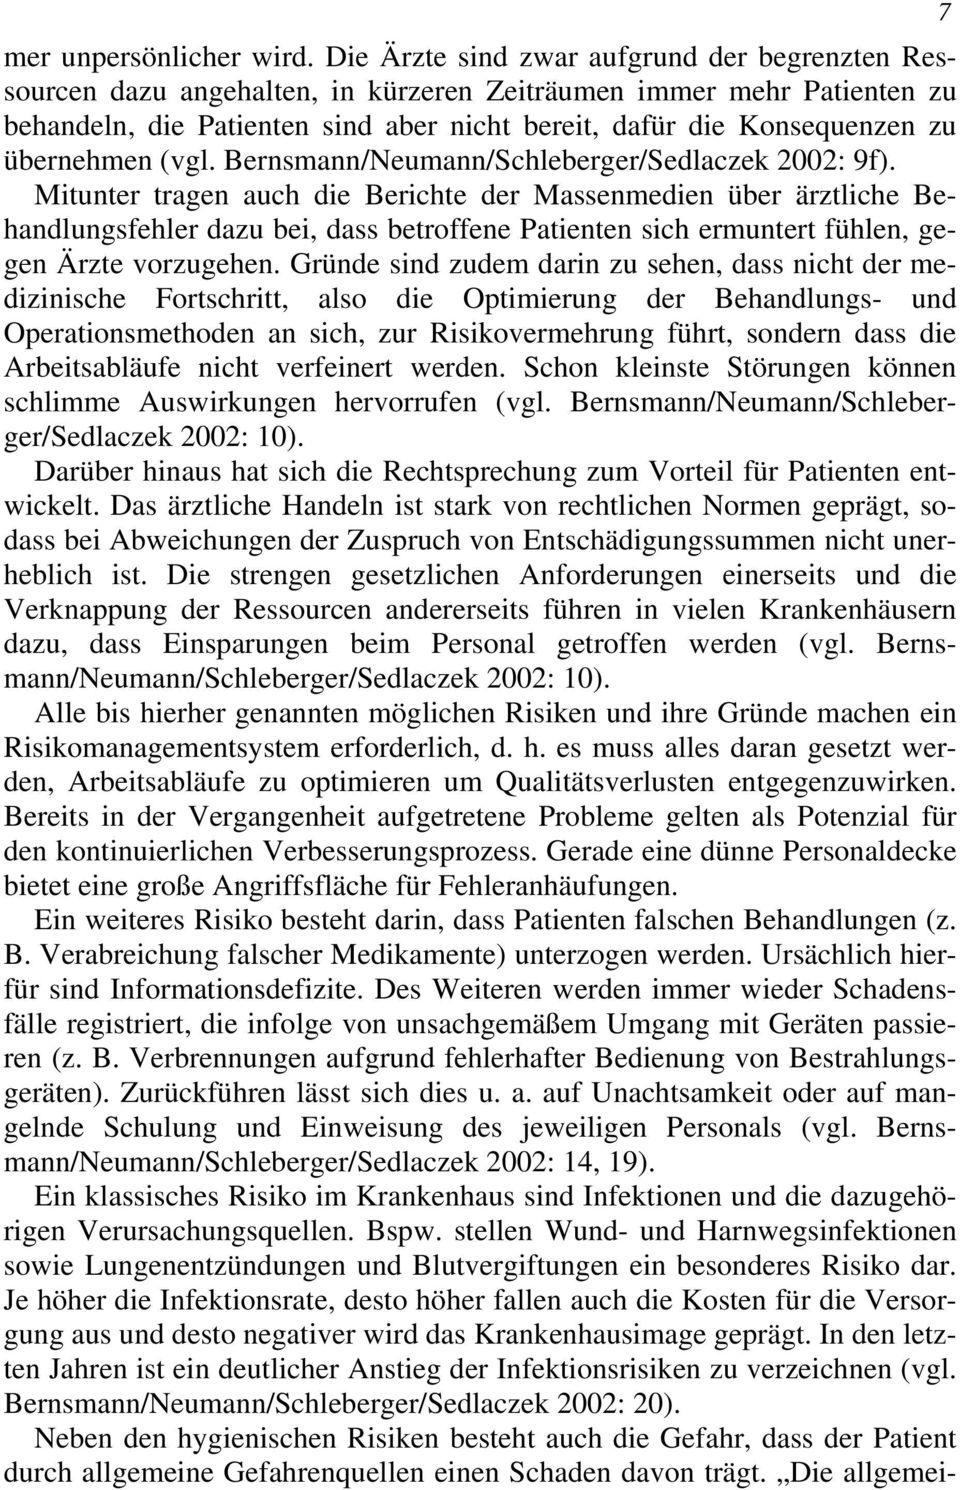 übernehmen (vgl. Bernsmann/Neumann/Schleberger/Sedlaczek 2002: 9f).